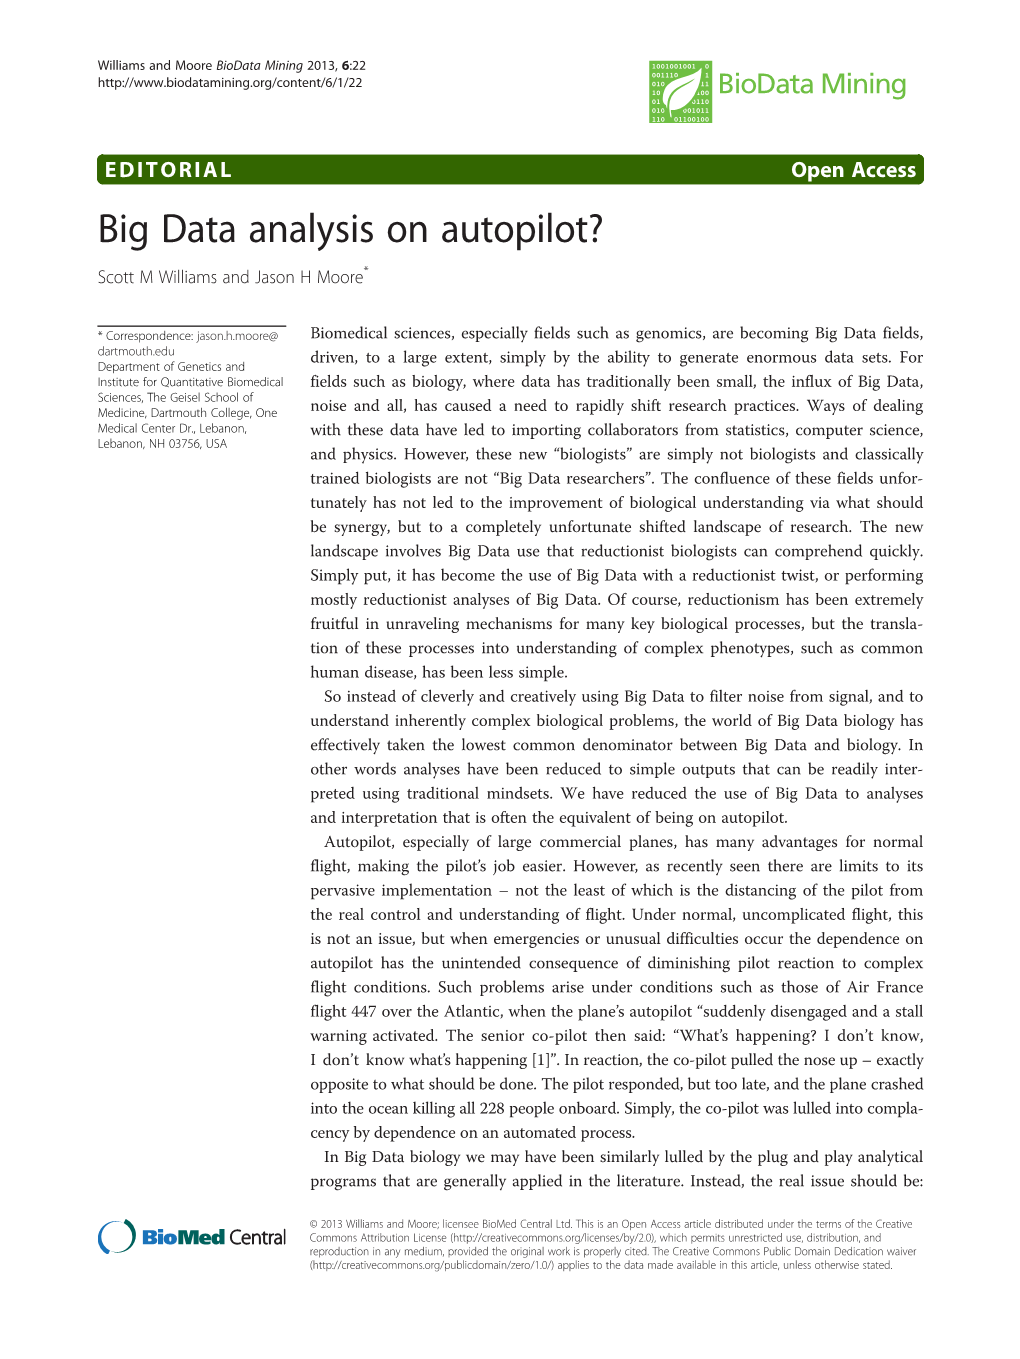 Big Data Analysis on Autopilot? Scott M Williams and Jason H Moore*